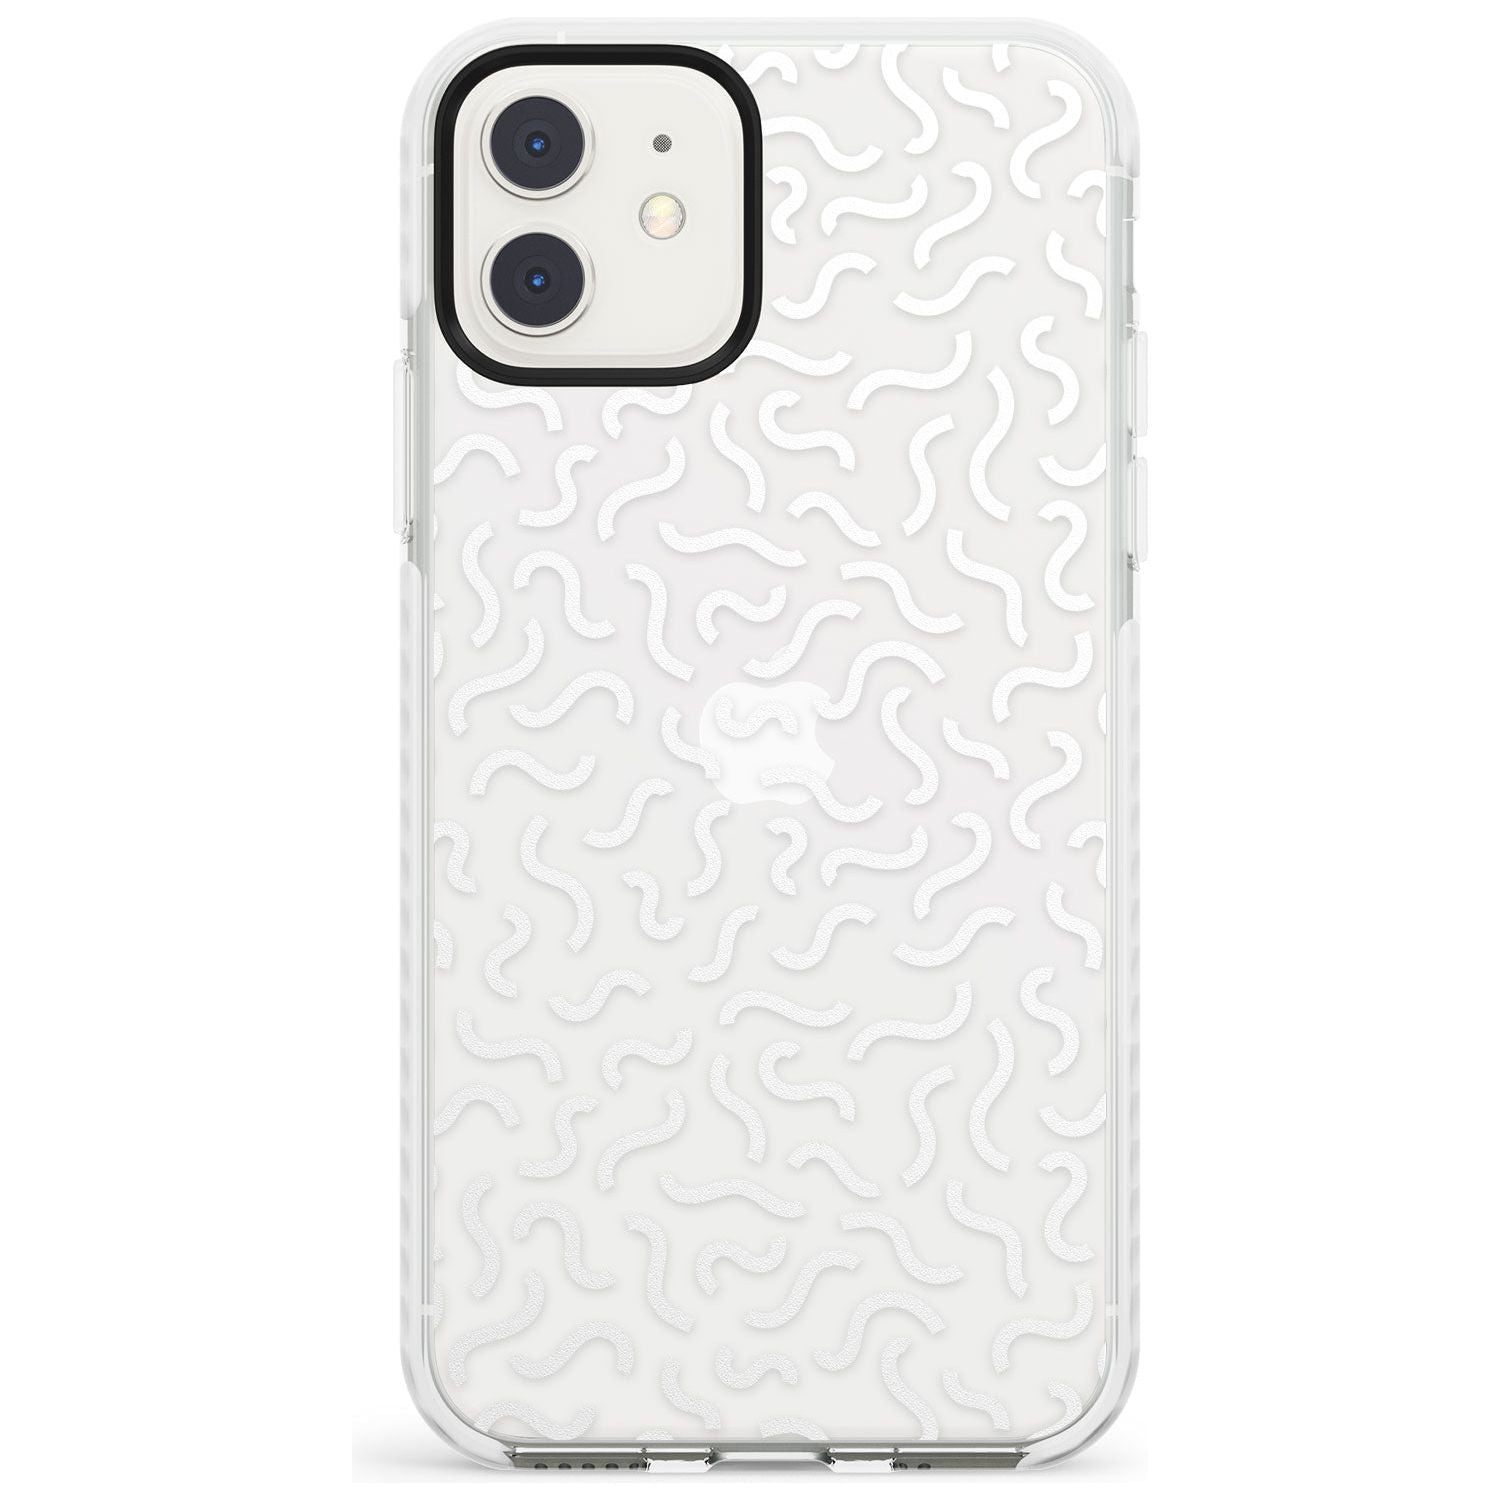 White Wavy Squiggles Memphis Retro Pattern Design Impact Phone Case for iPhone 11